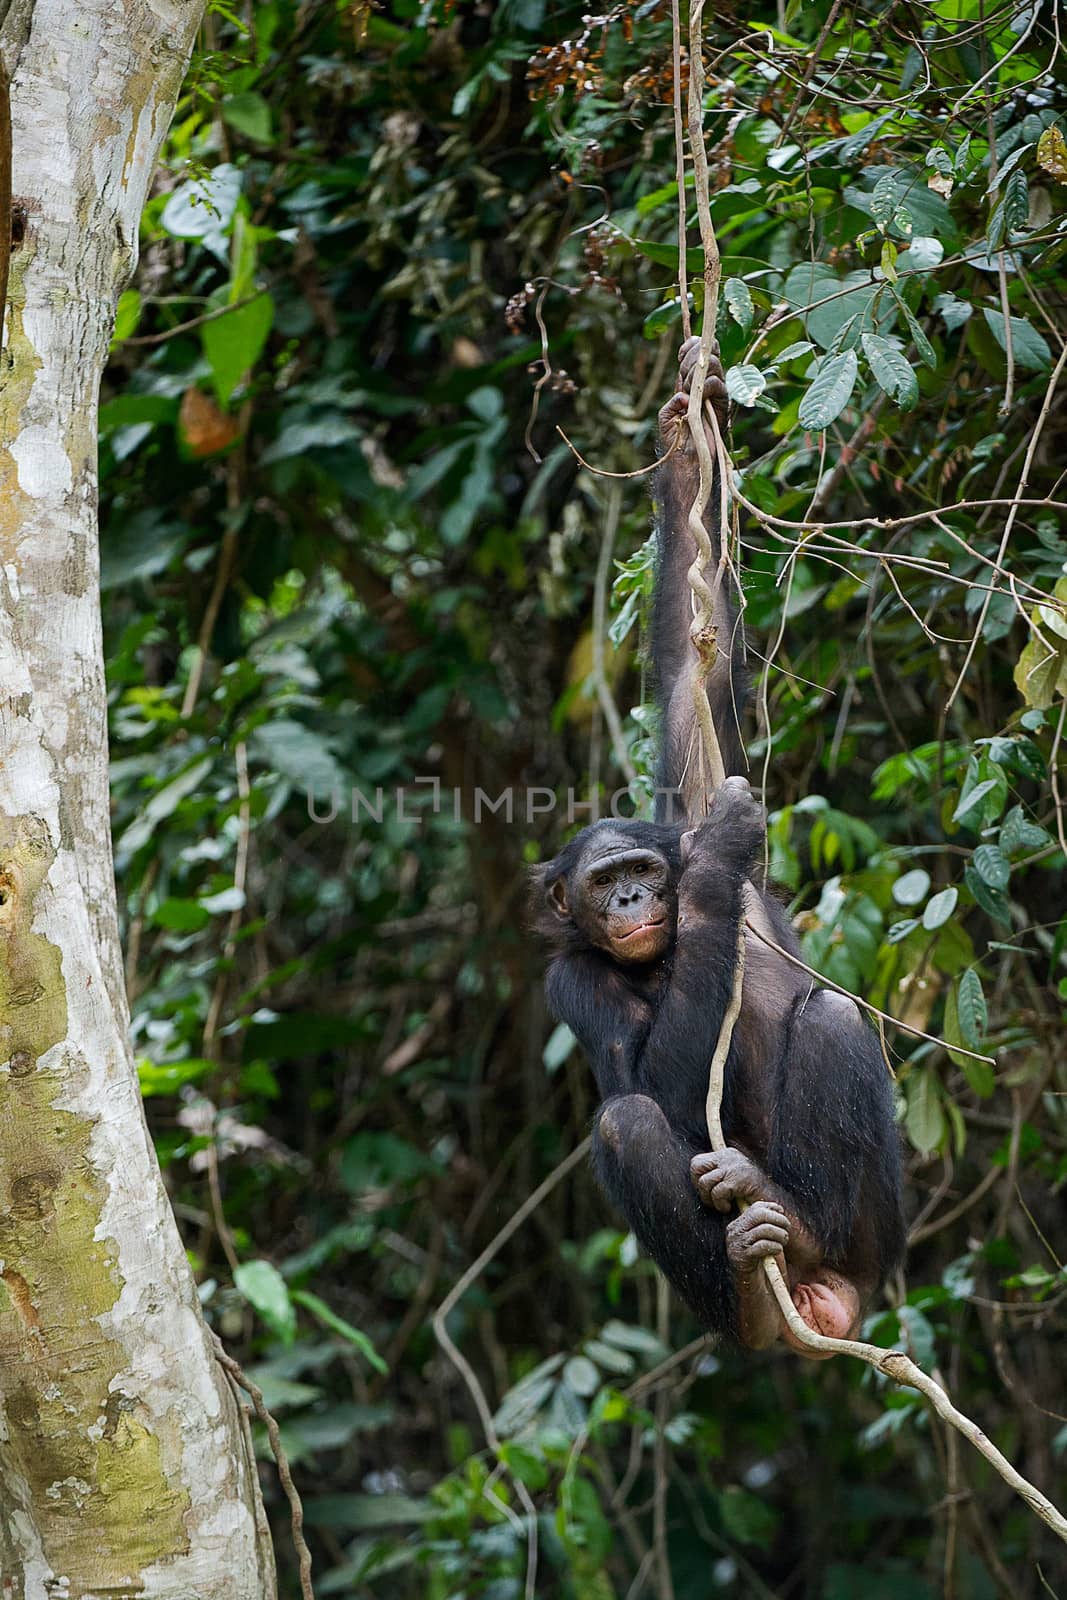  Bonobo on a tree branch.  by SURZ